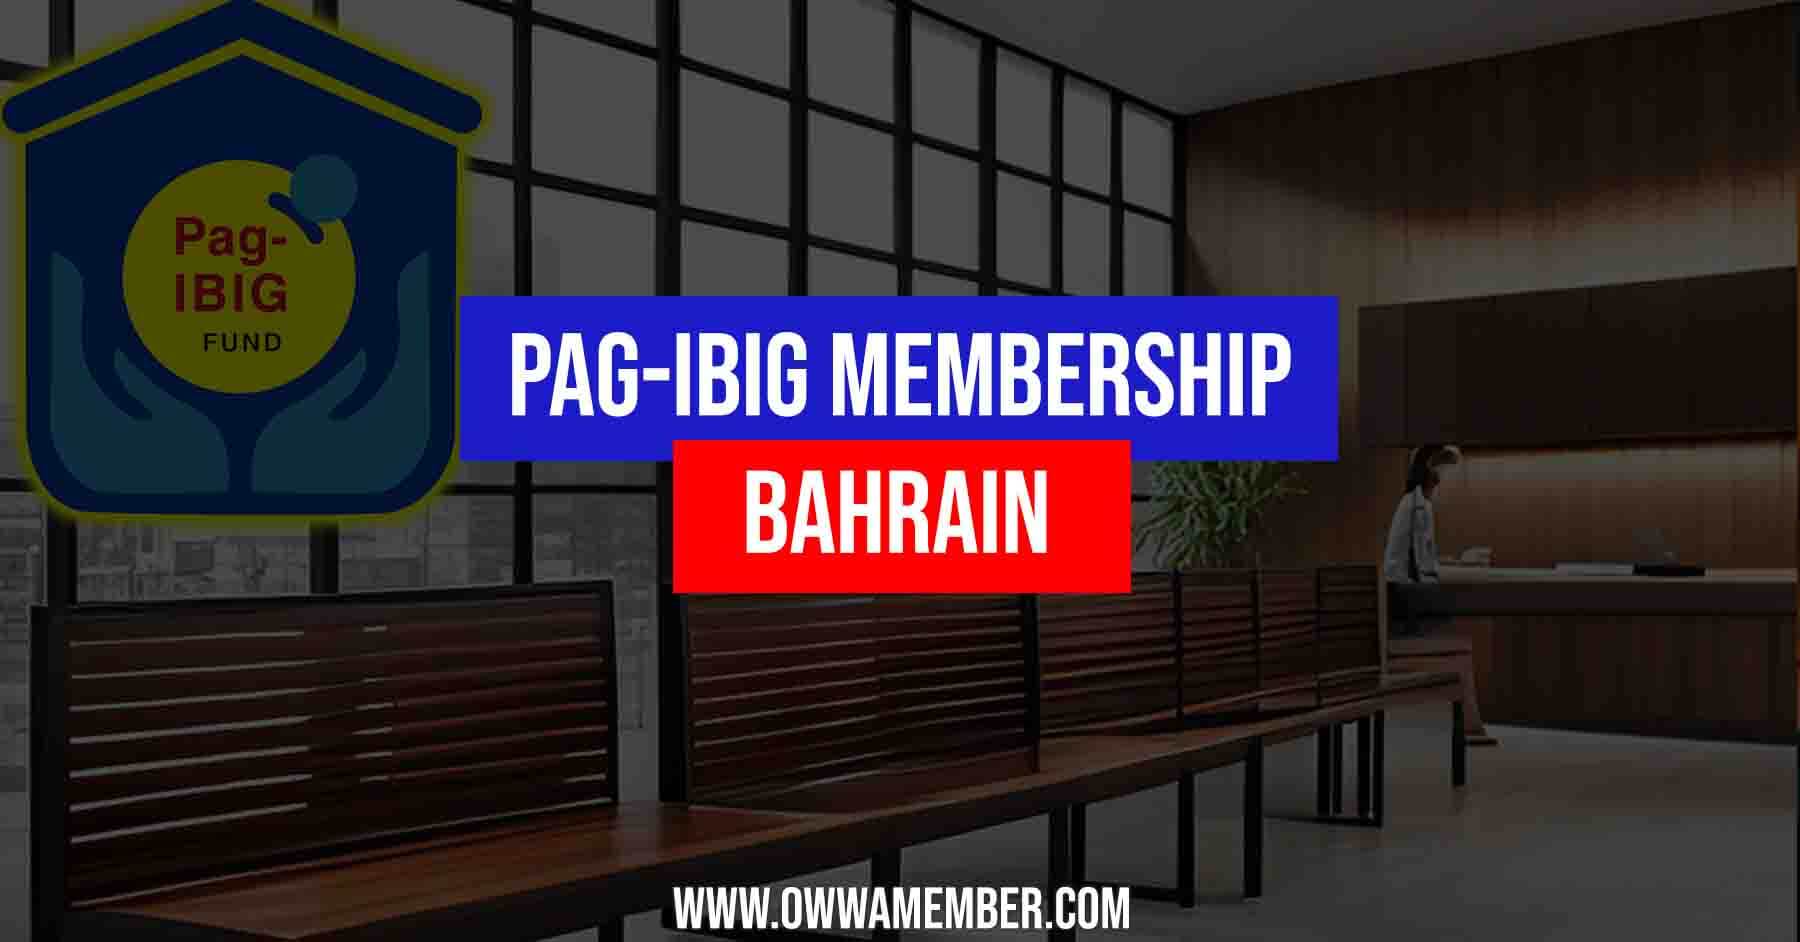 pagibig membership in bahrain office